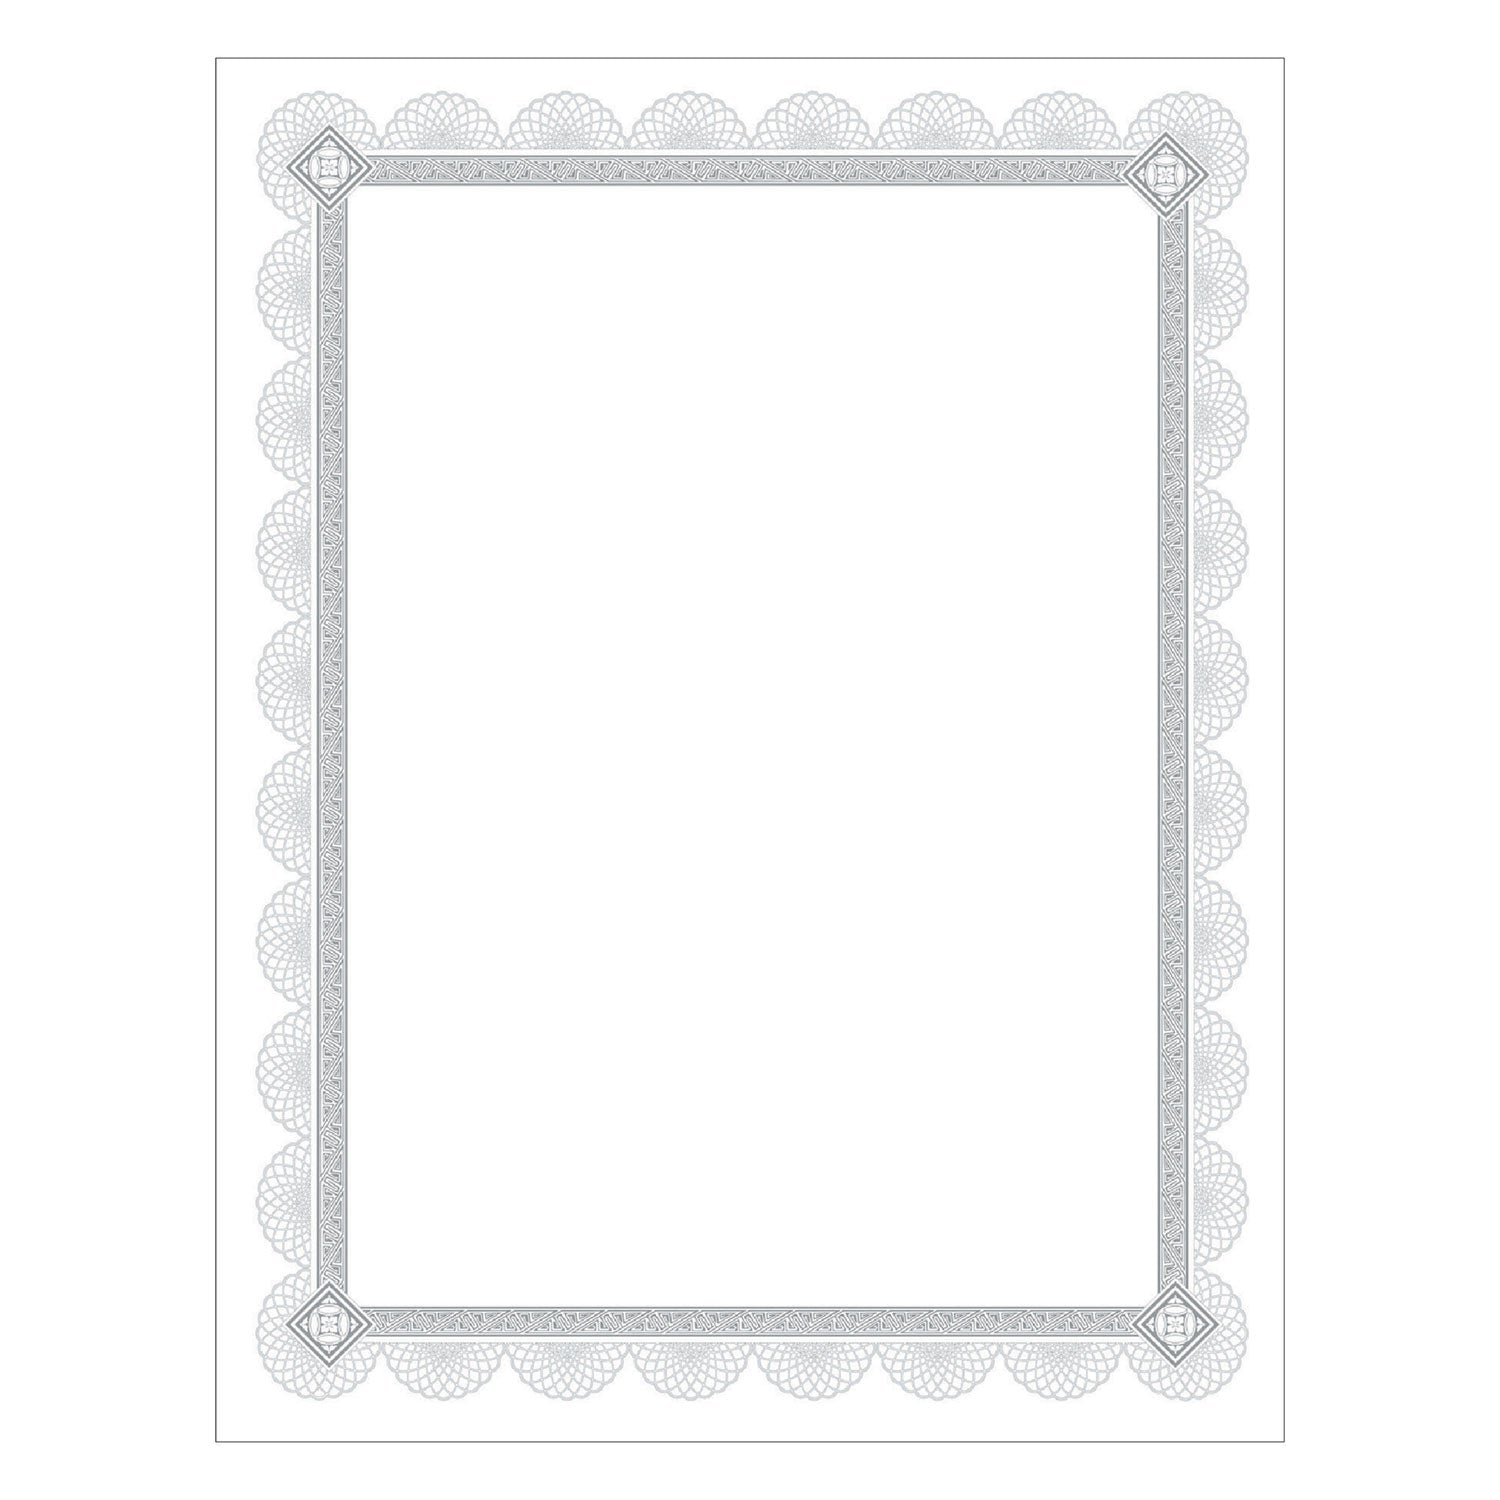 Premium Certificates, 8.5 x 11, White/Silver with Spiro Silver Foil Border,15/Pack - 